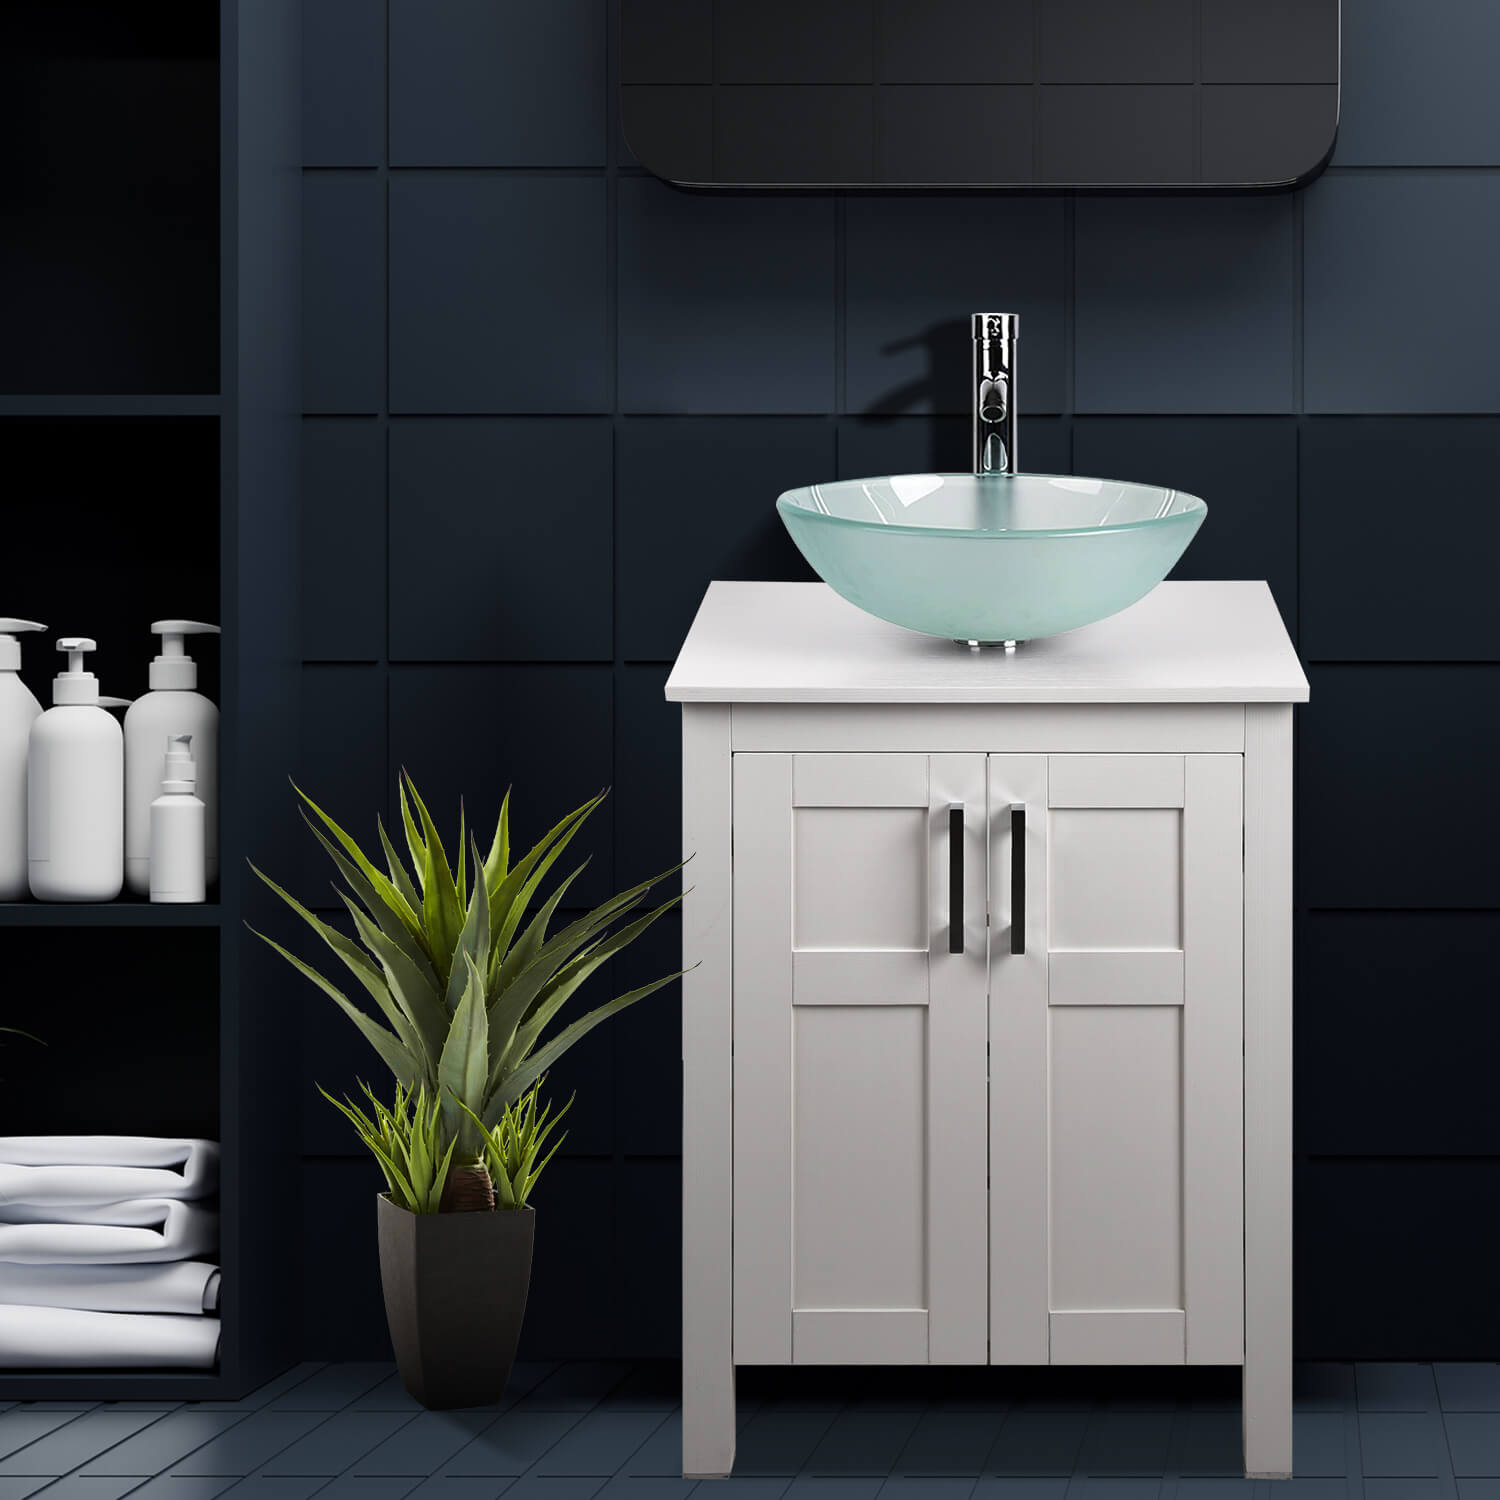 Elecwish White Bathroom Vanity and Clear Green Sink Set HW1120-WH display scene